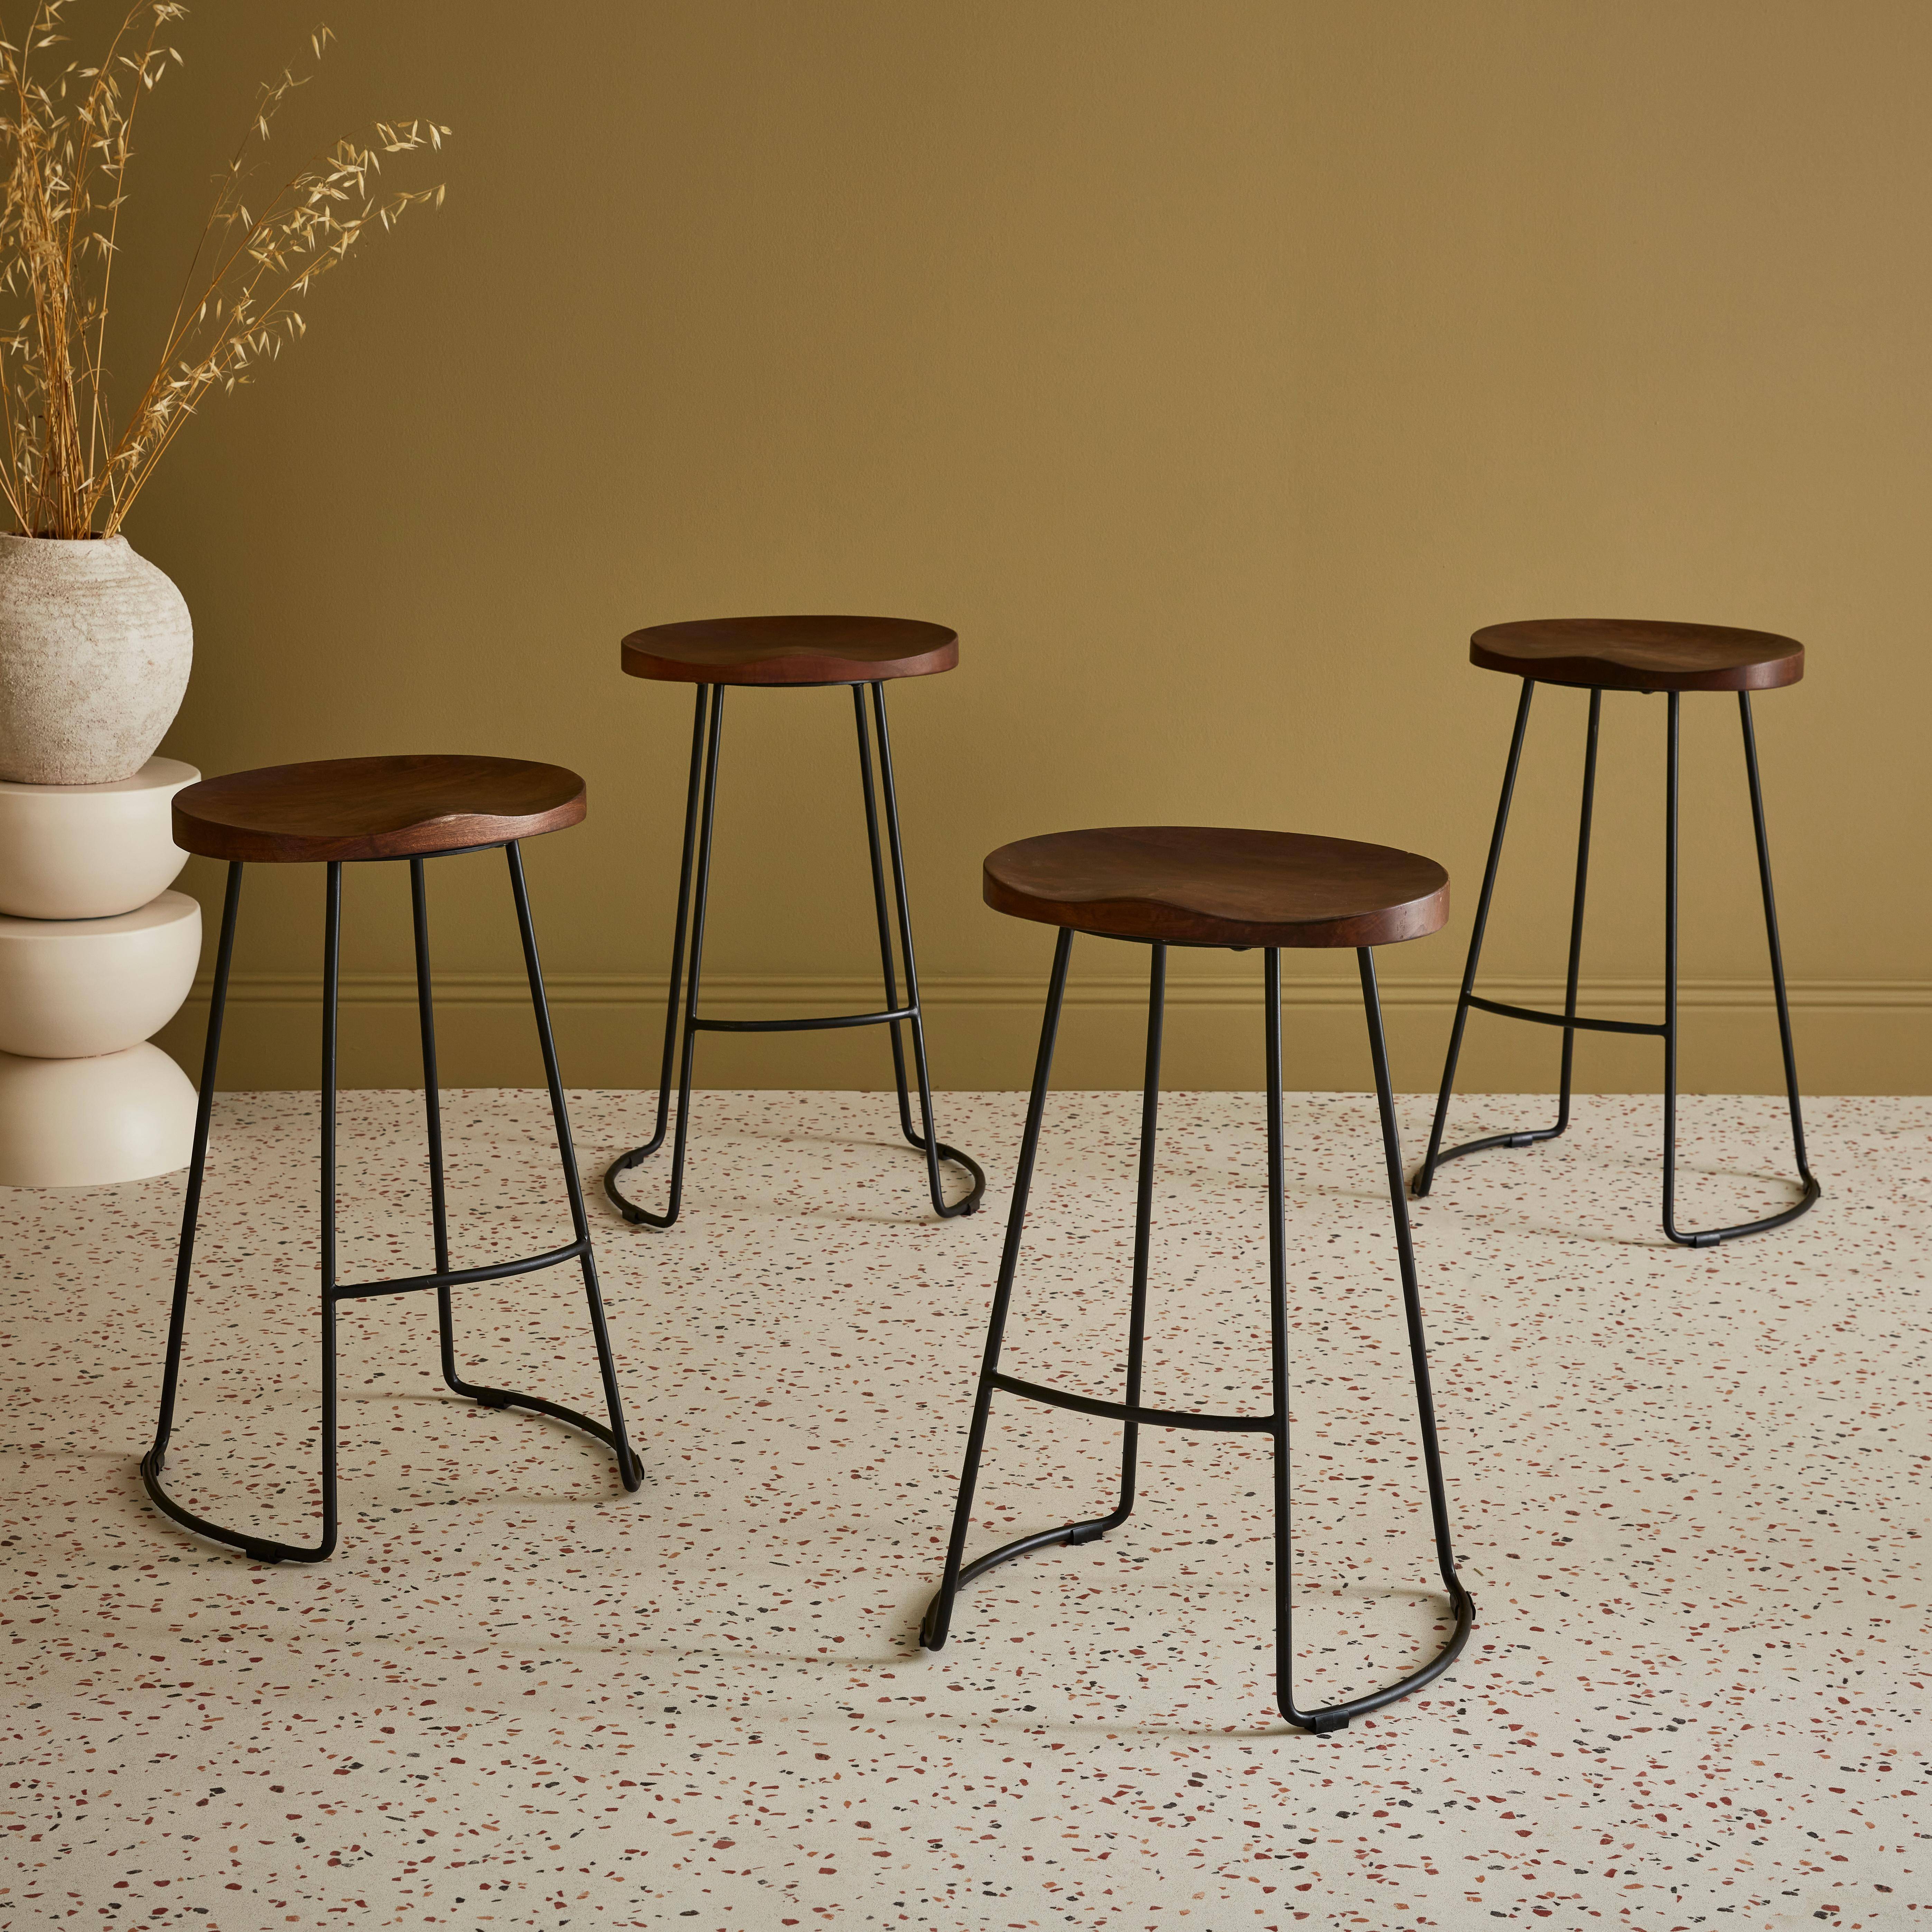 Set of 4 industrial metal and wooden bar stools, 44x36x65cm, Jaya, Light Walnut, Mango wood seat, black metal legs,sweeek,Photo1